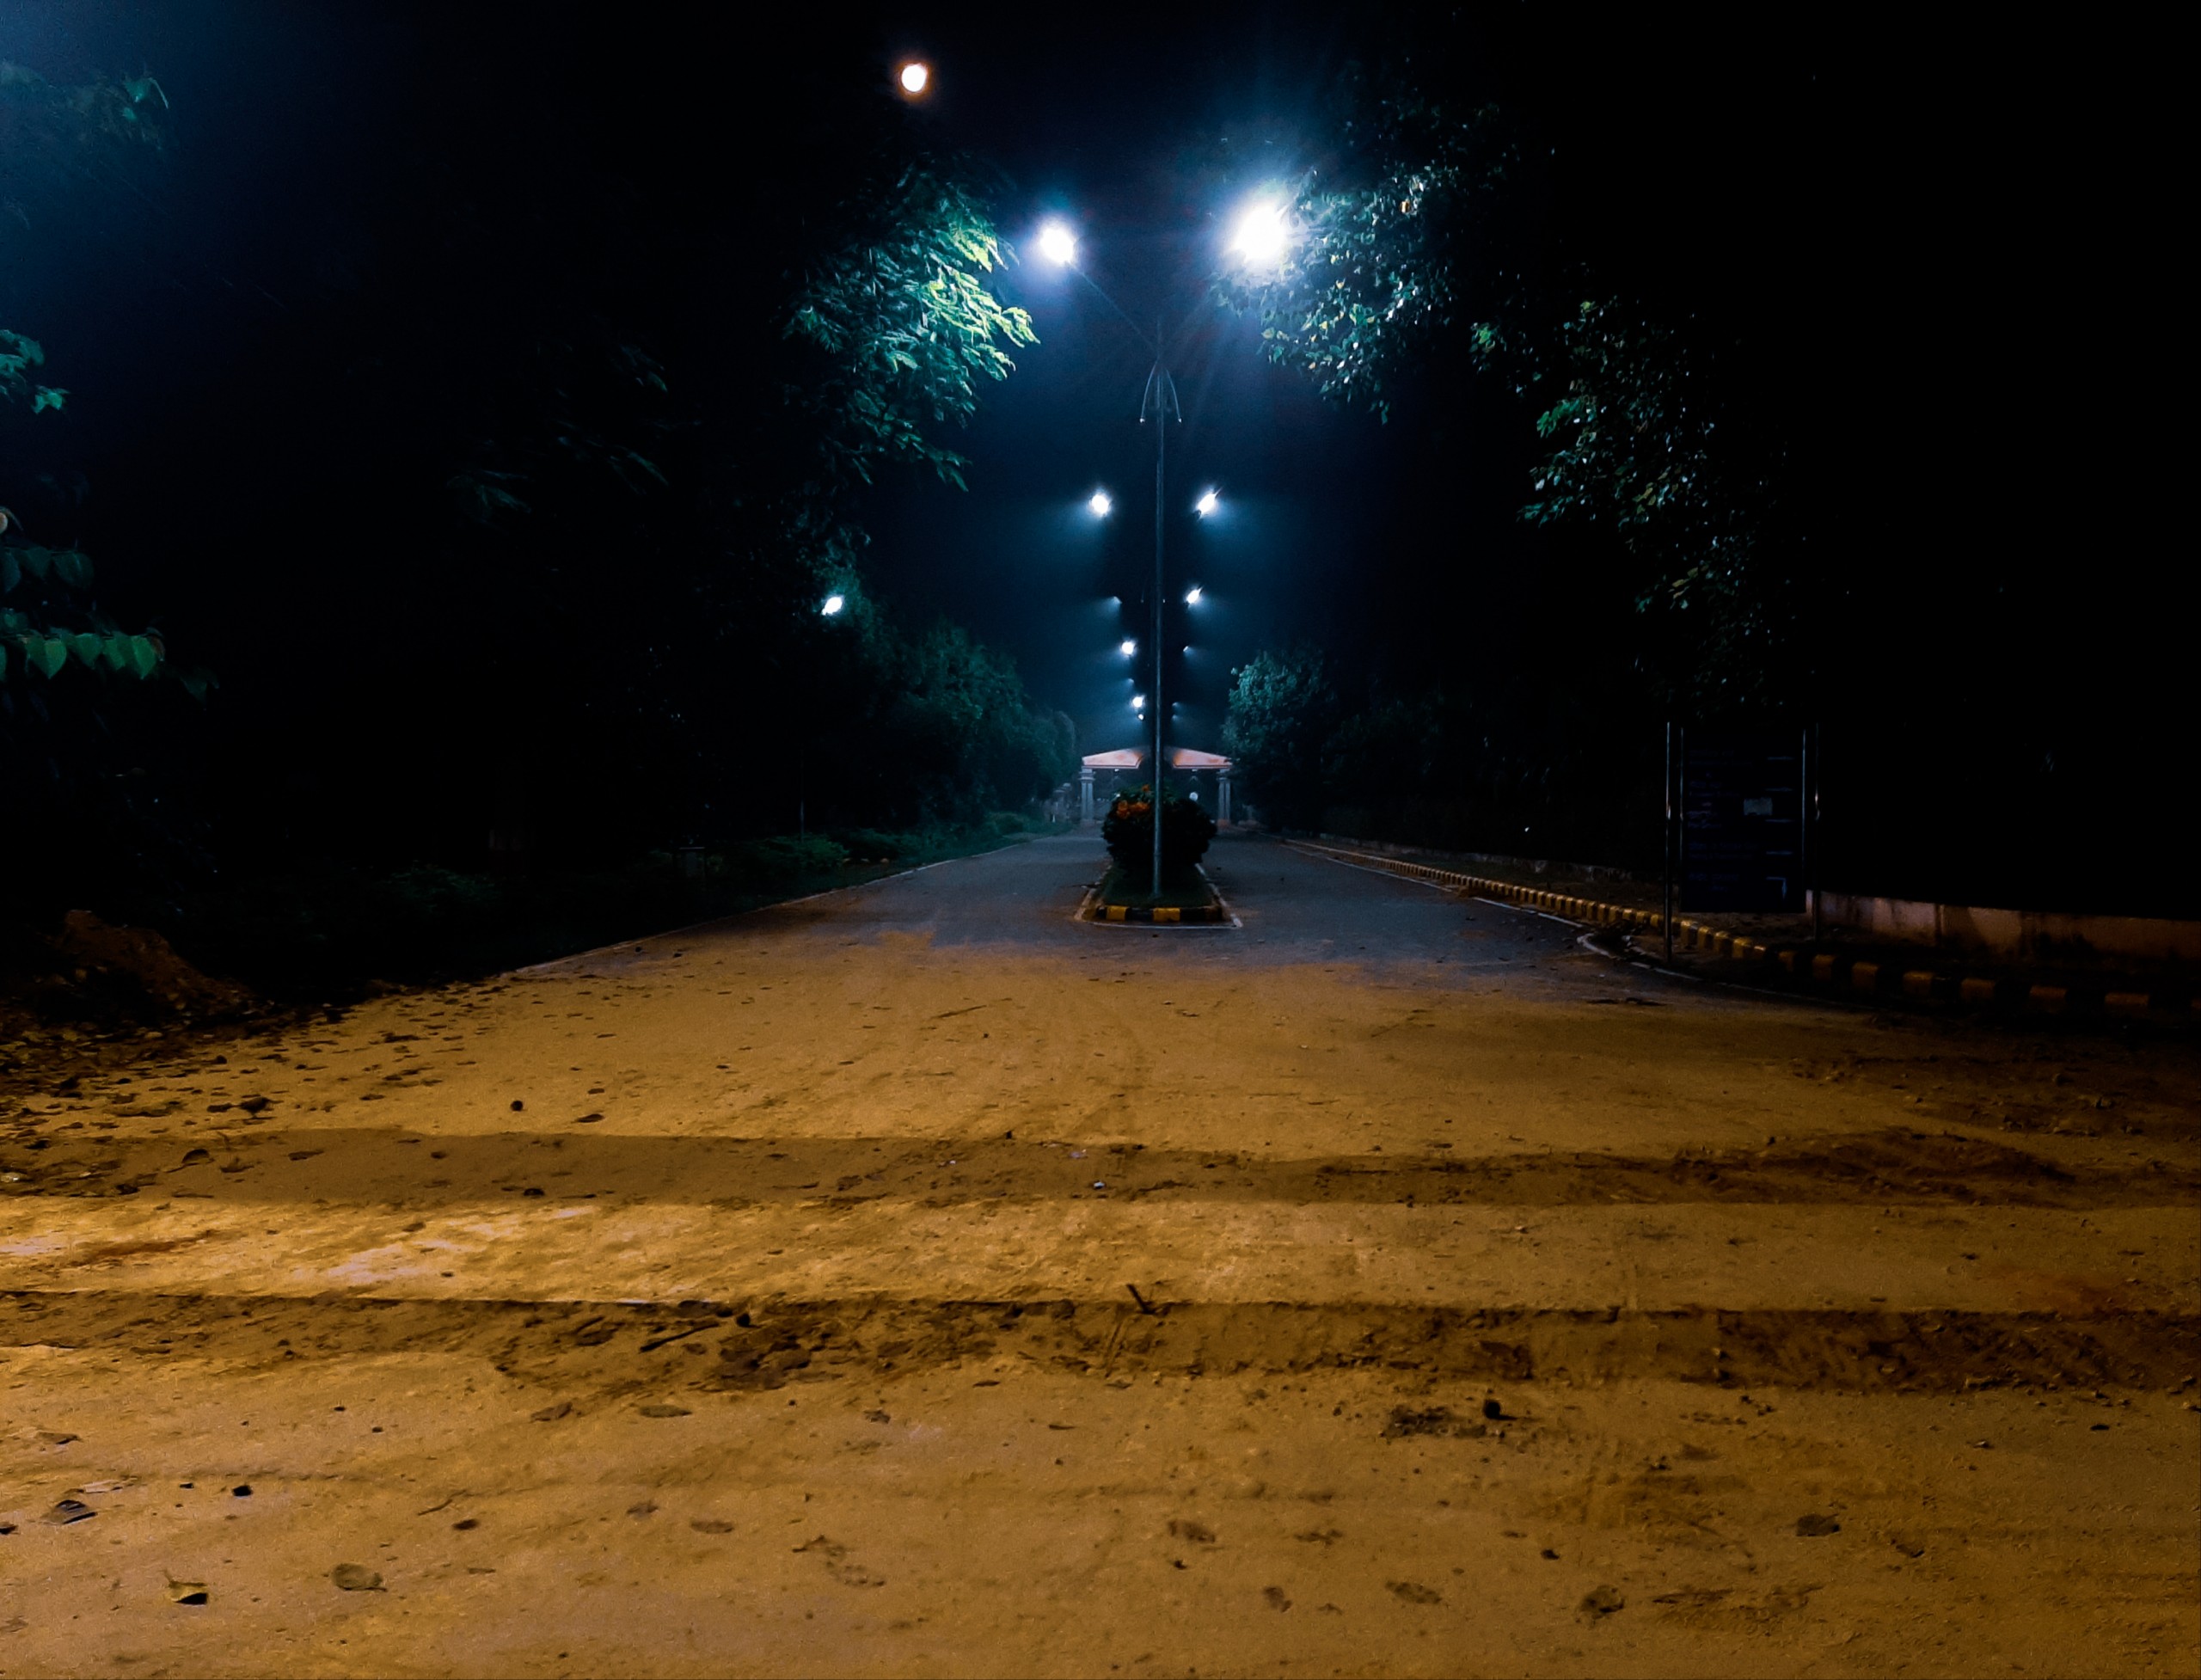 Night Road